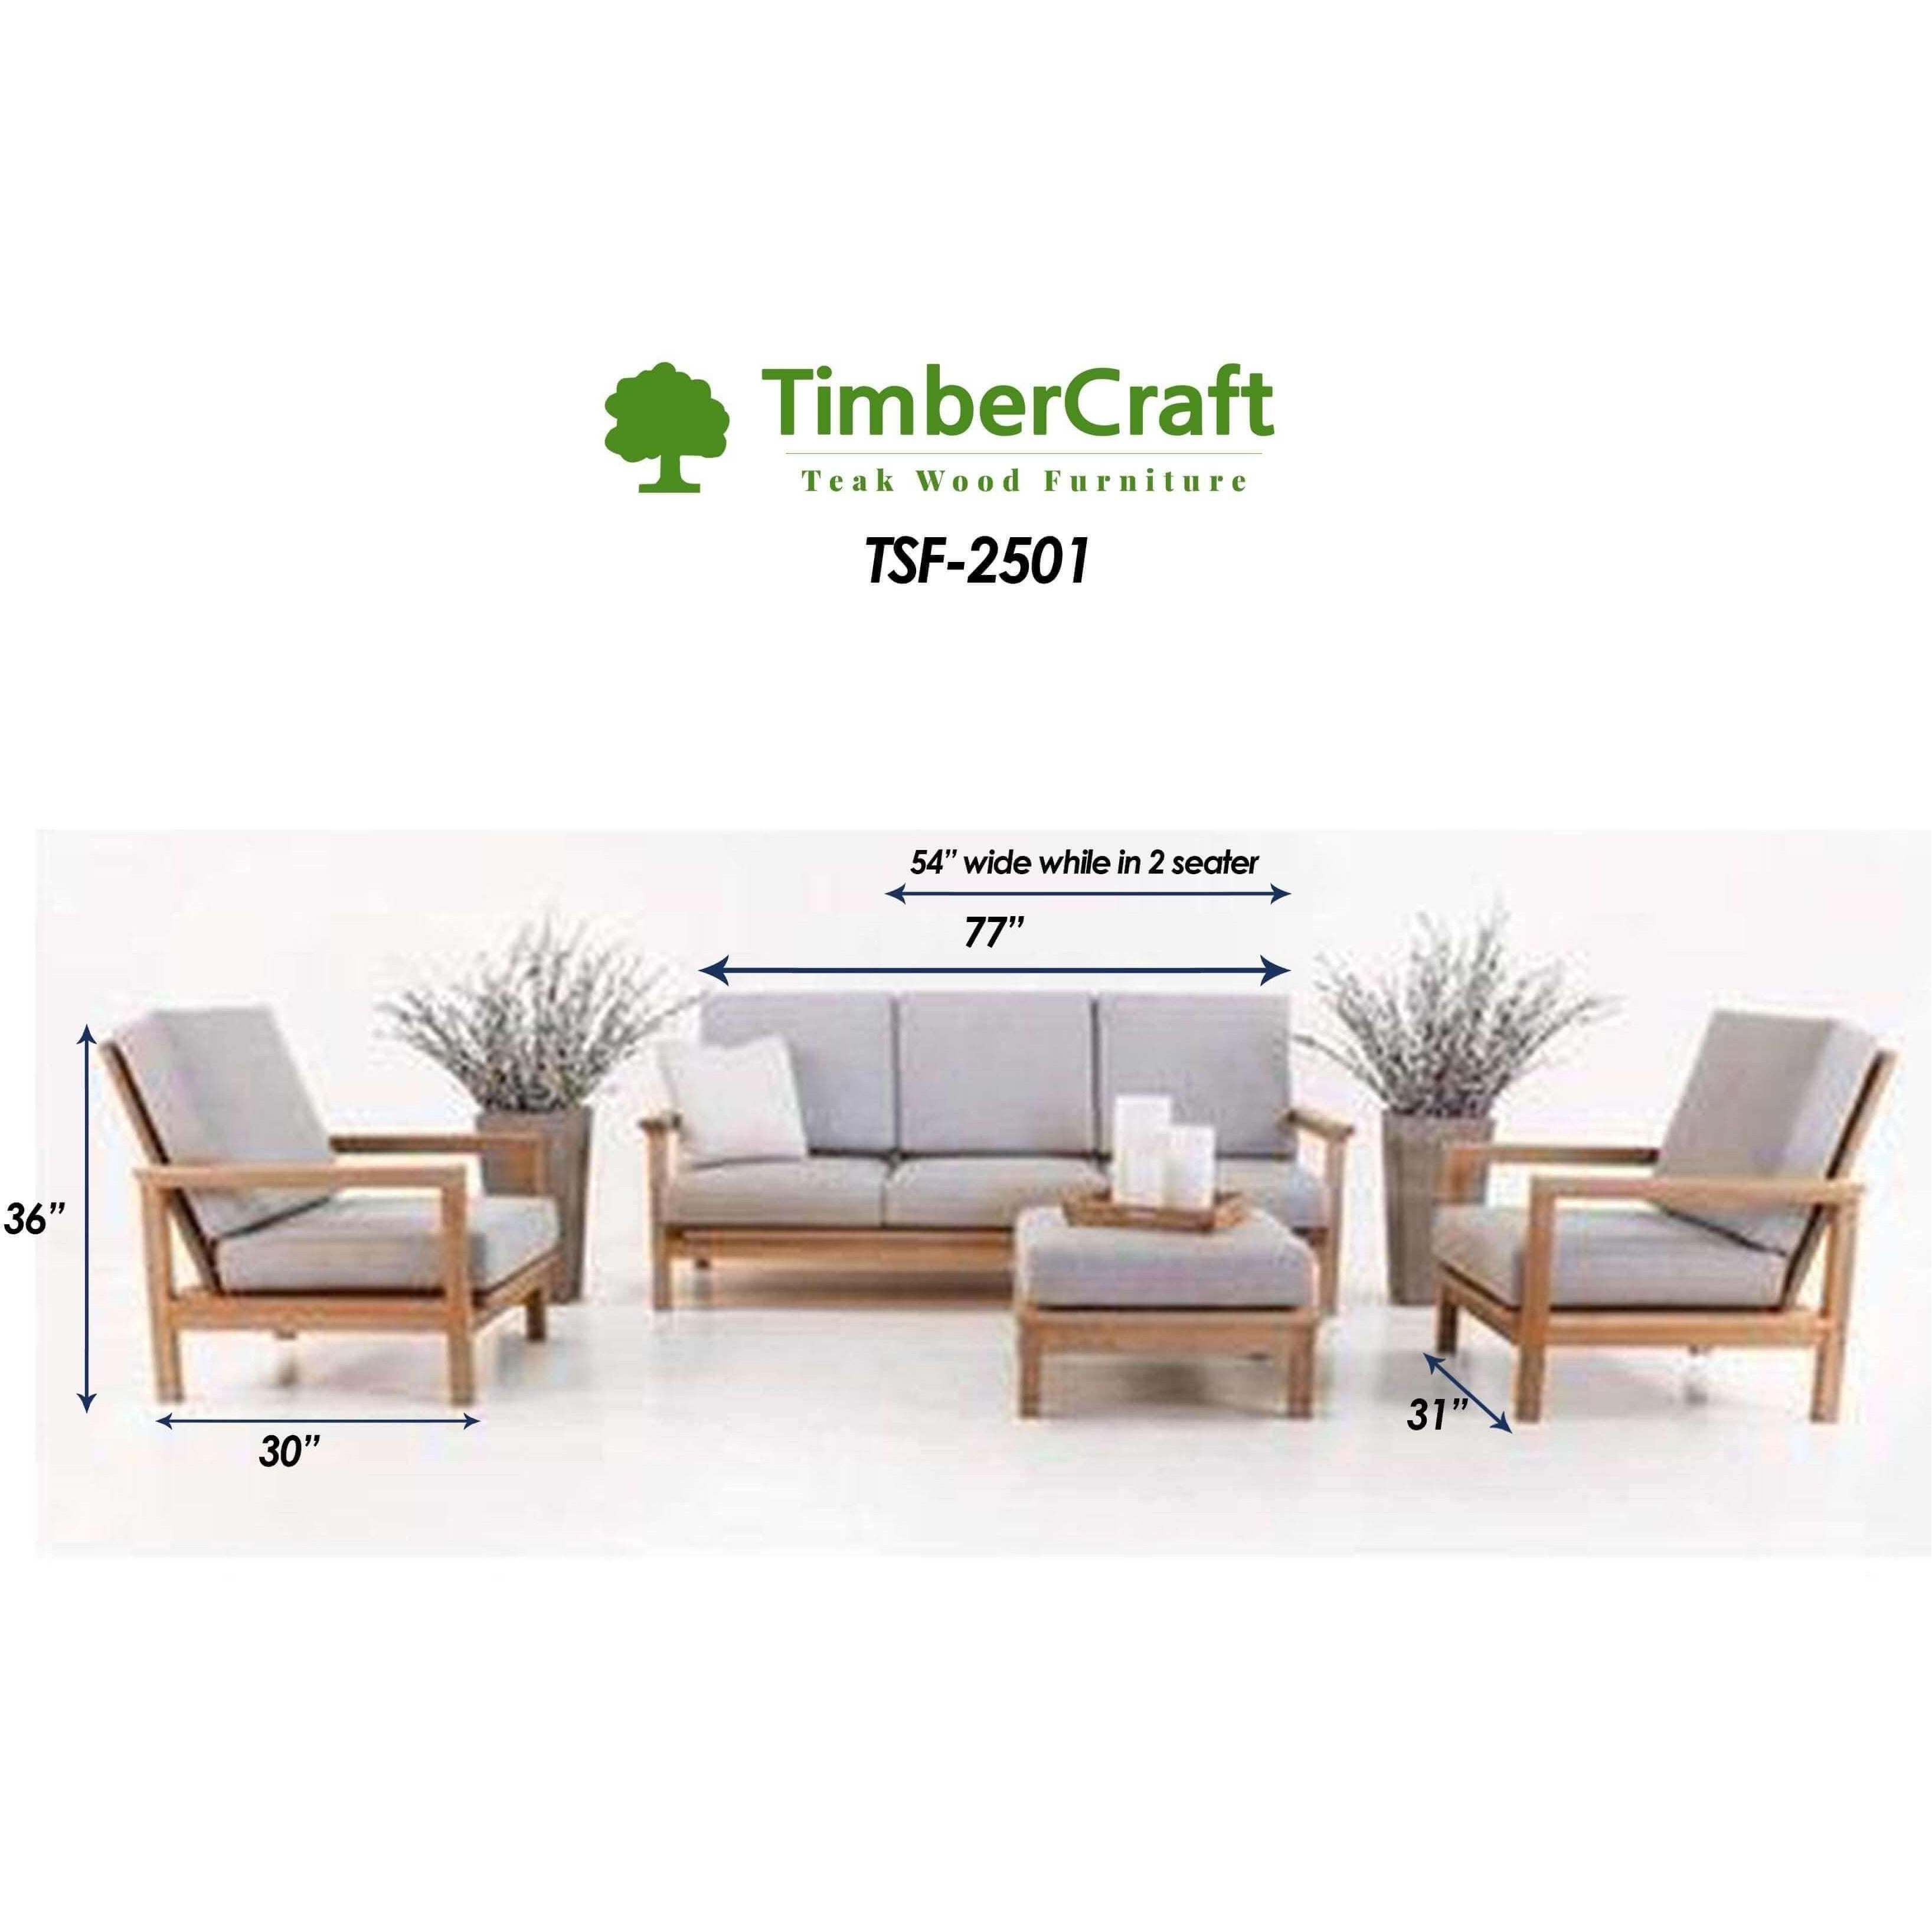 Teak Wood Sofa TSF-2501 - TimberCraft